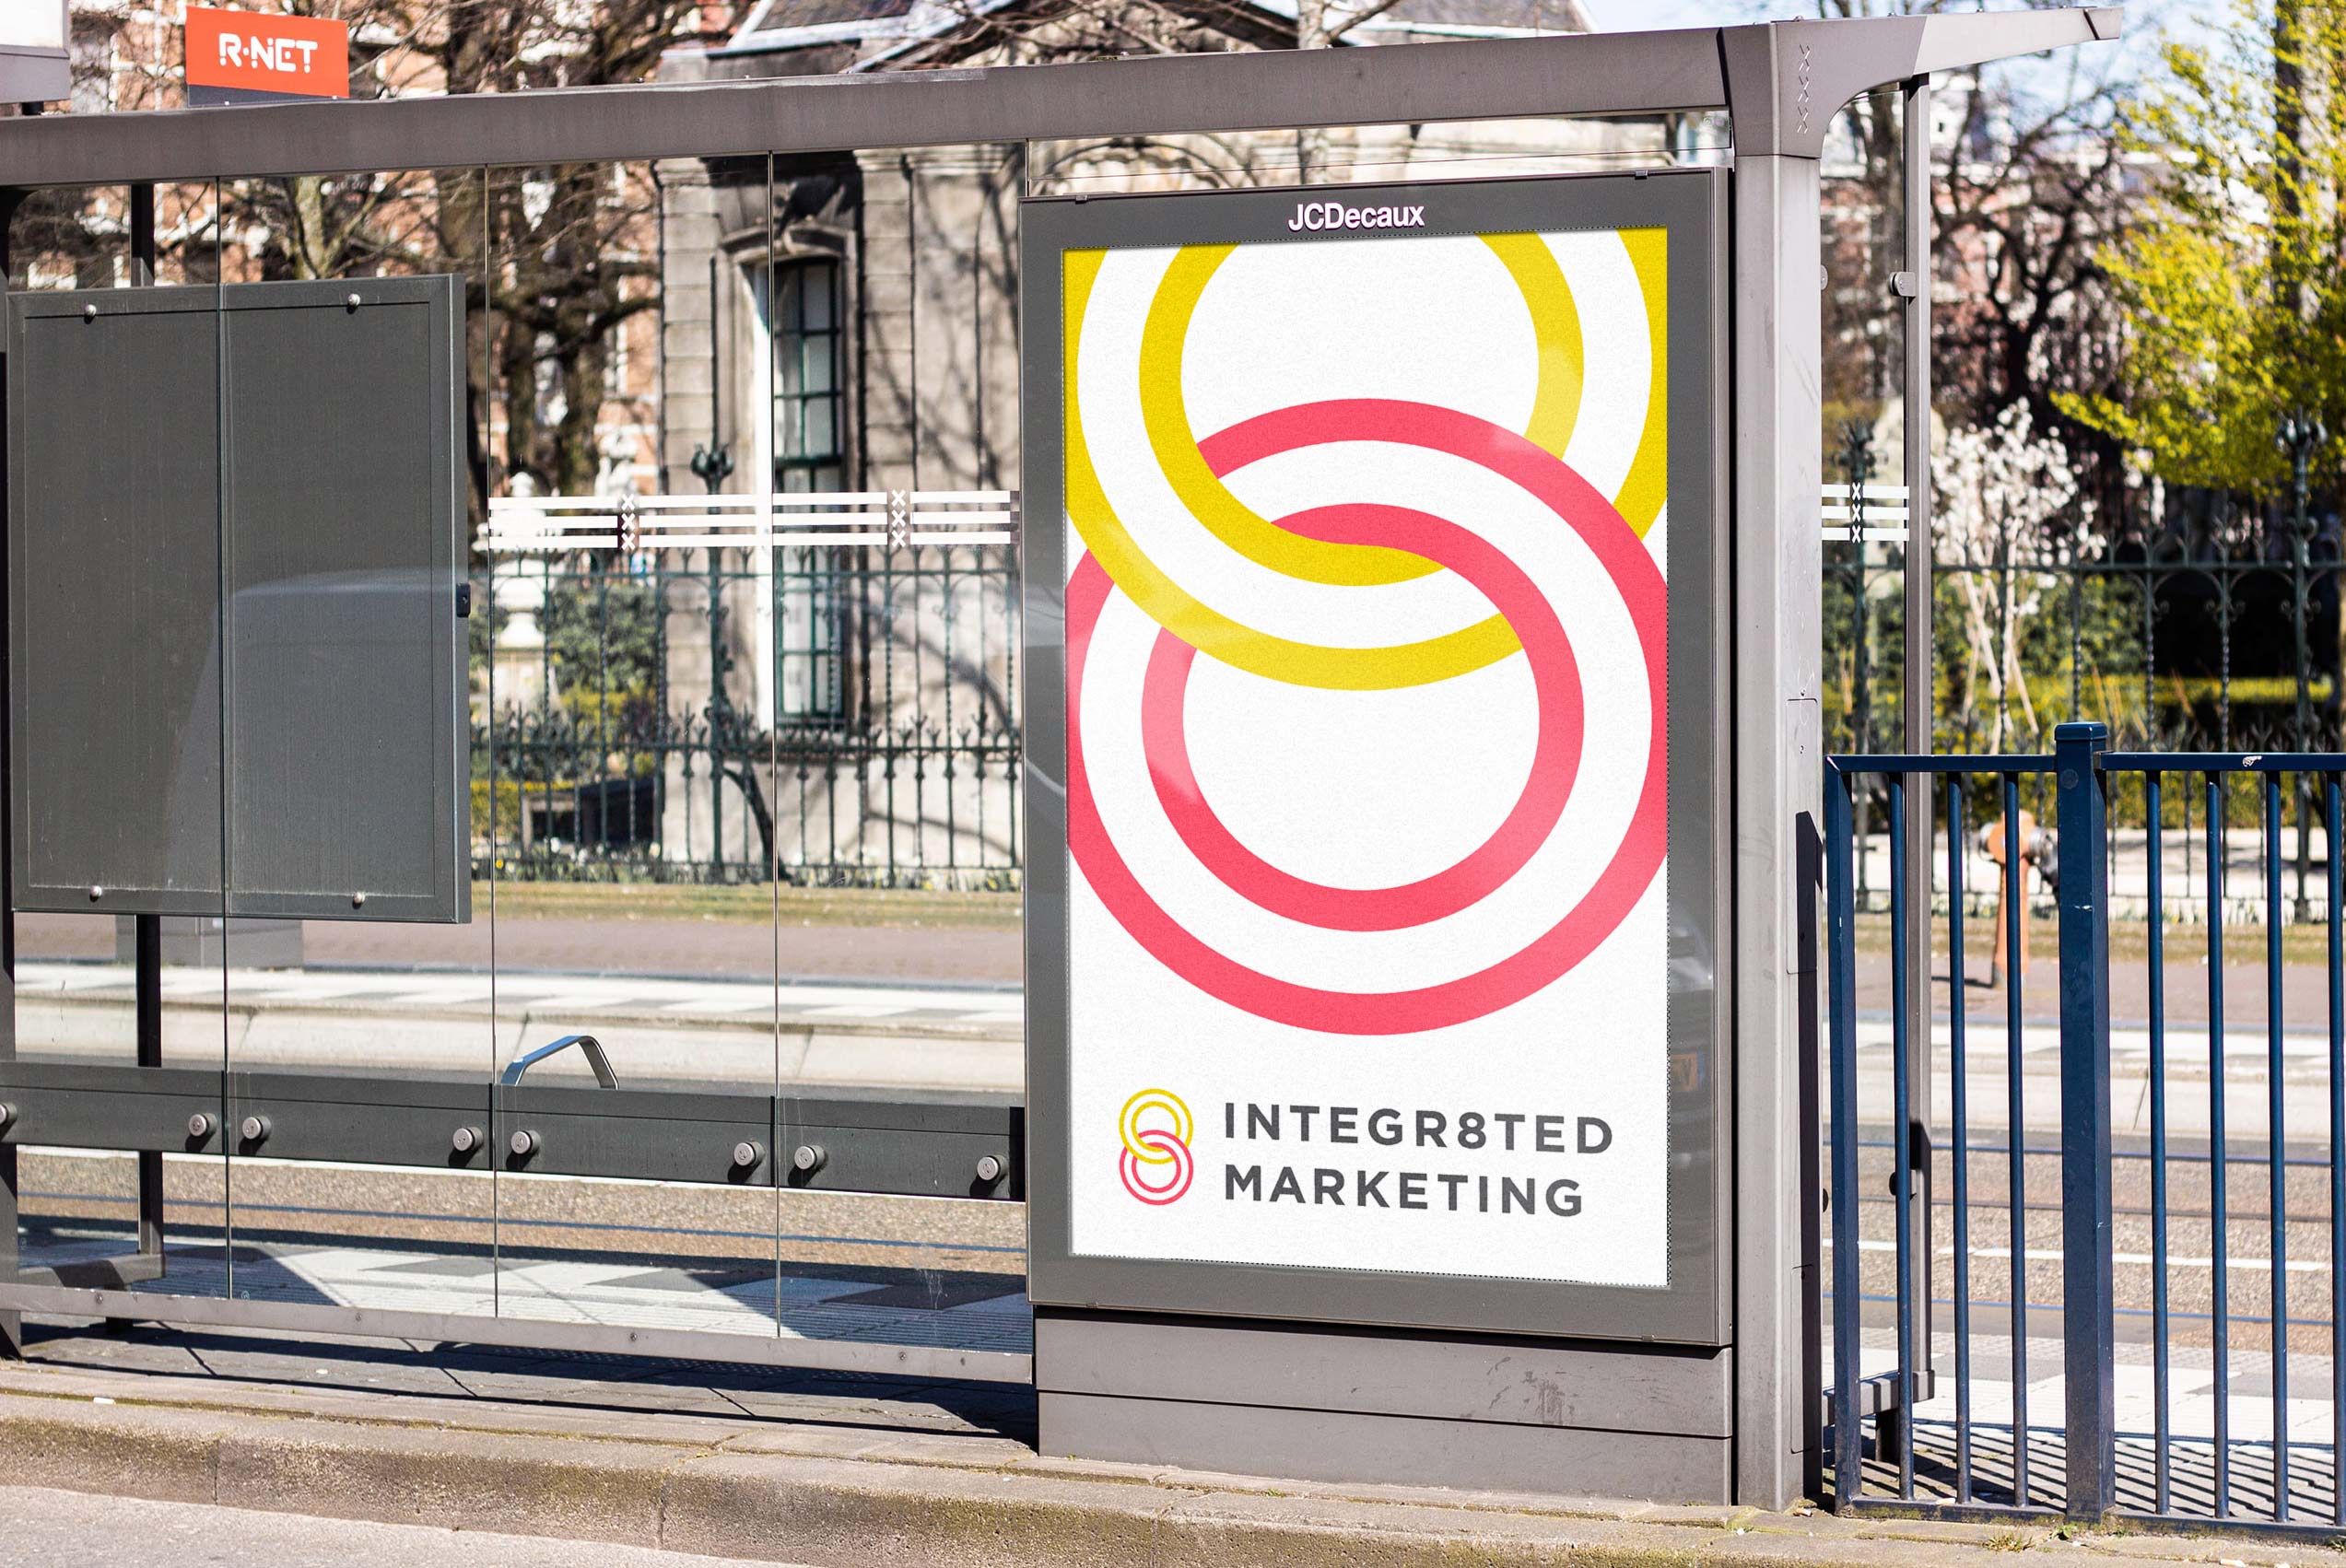 Marketing logo design on a bus stop billboard.